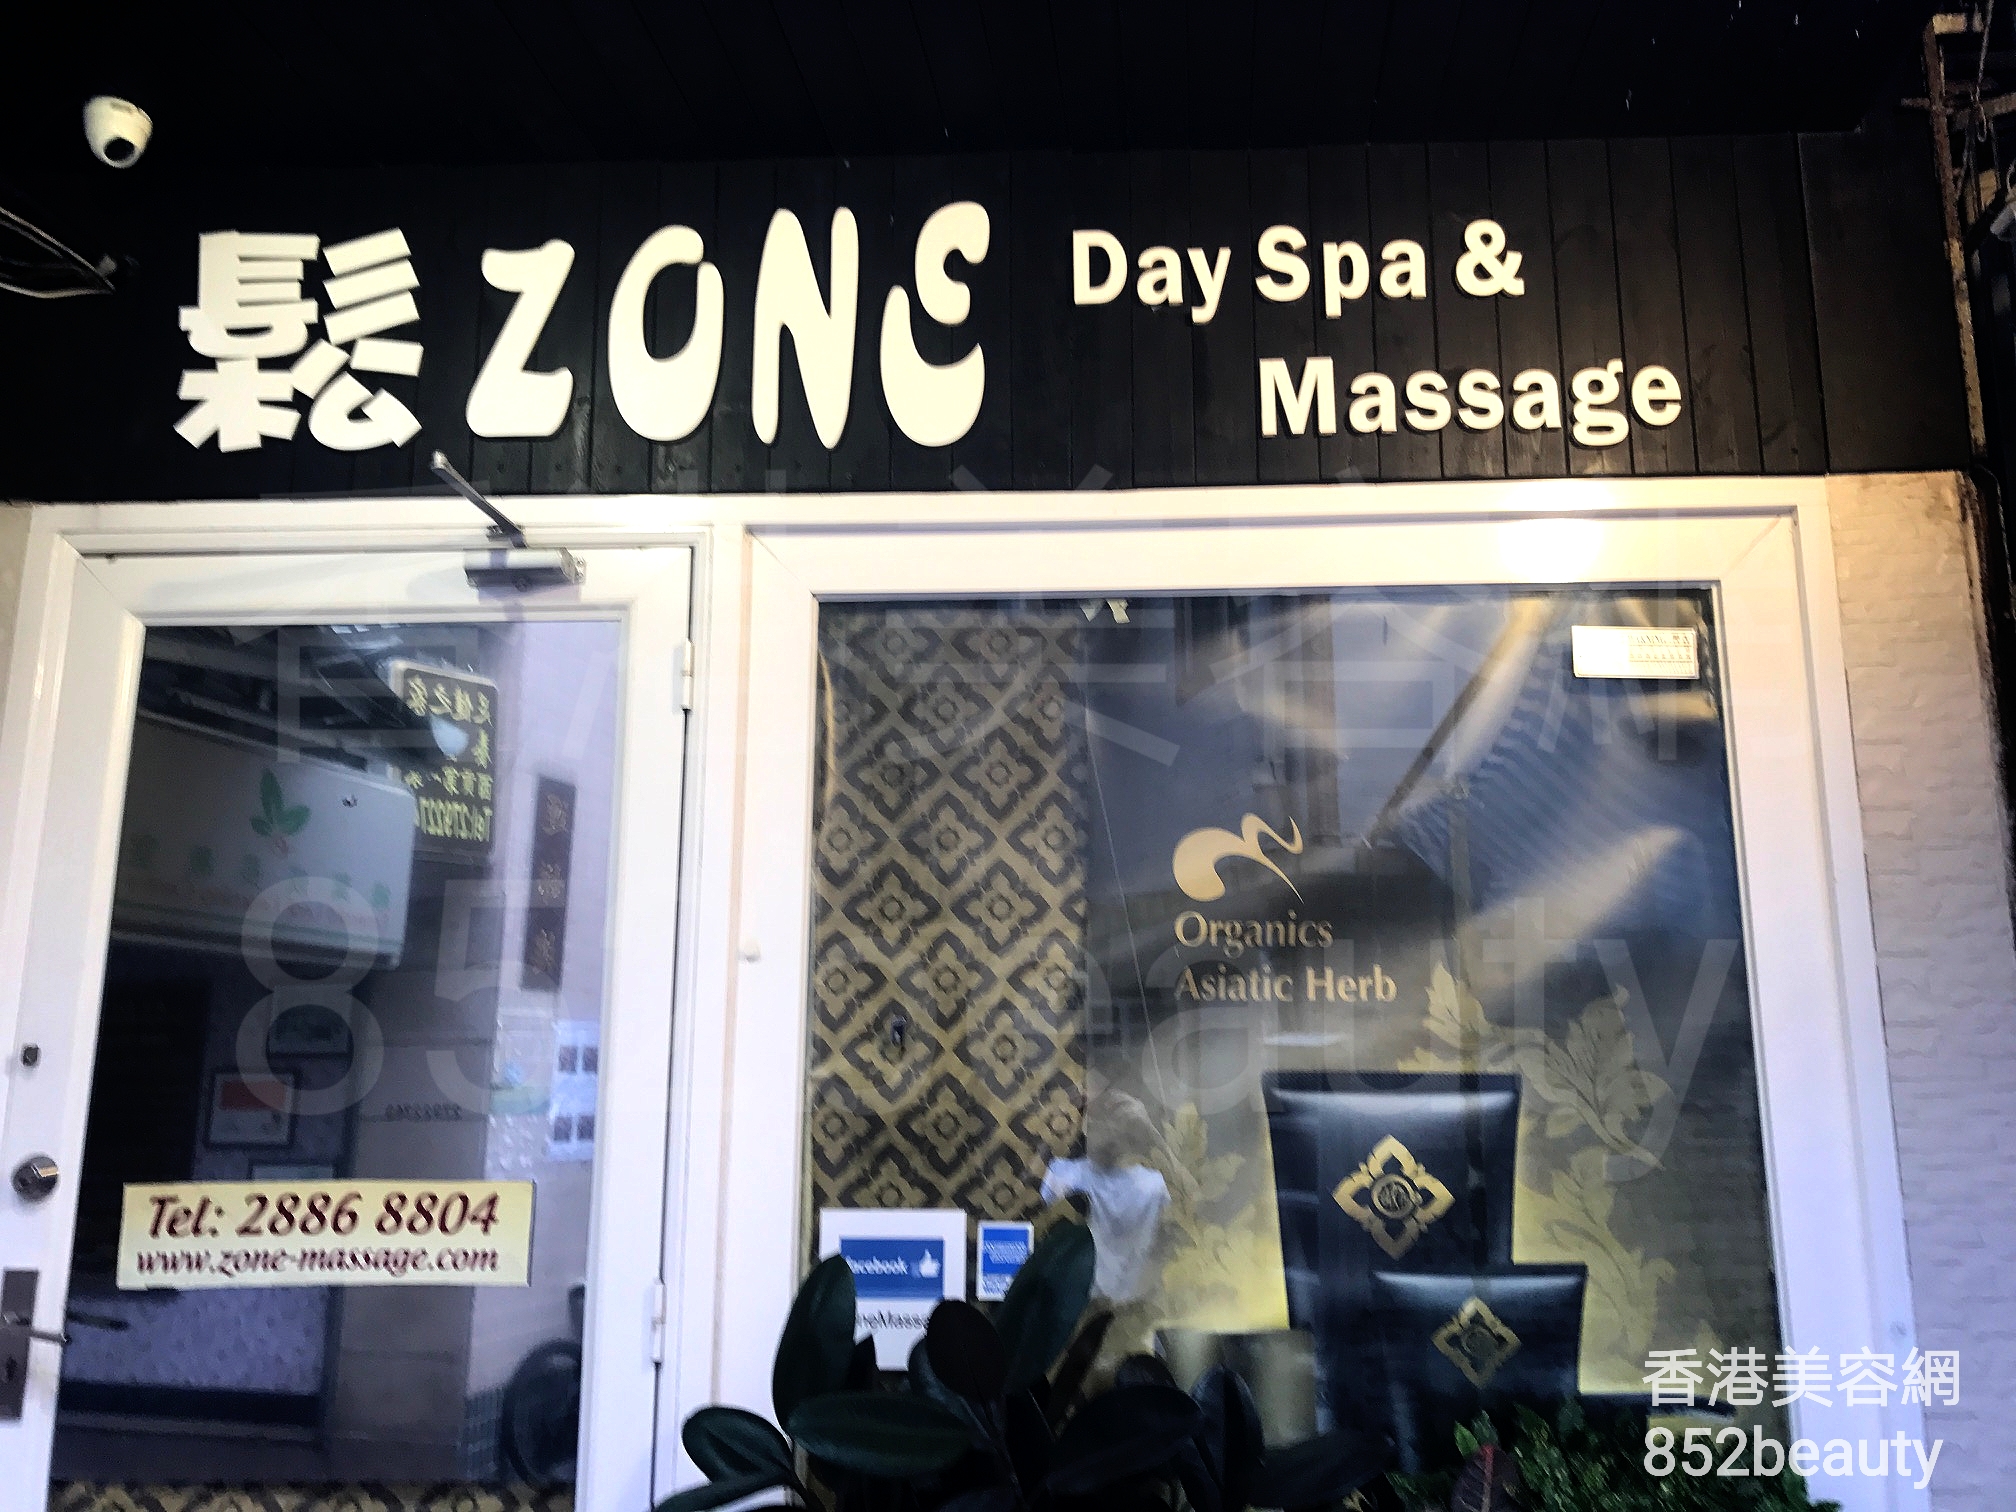 Manicure: 鬆Zone Day Spa & Massage